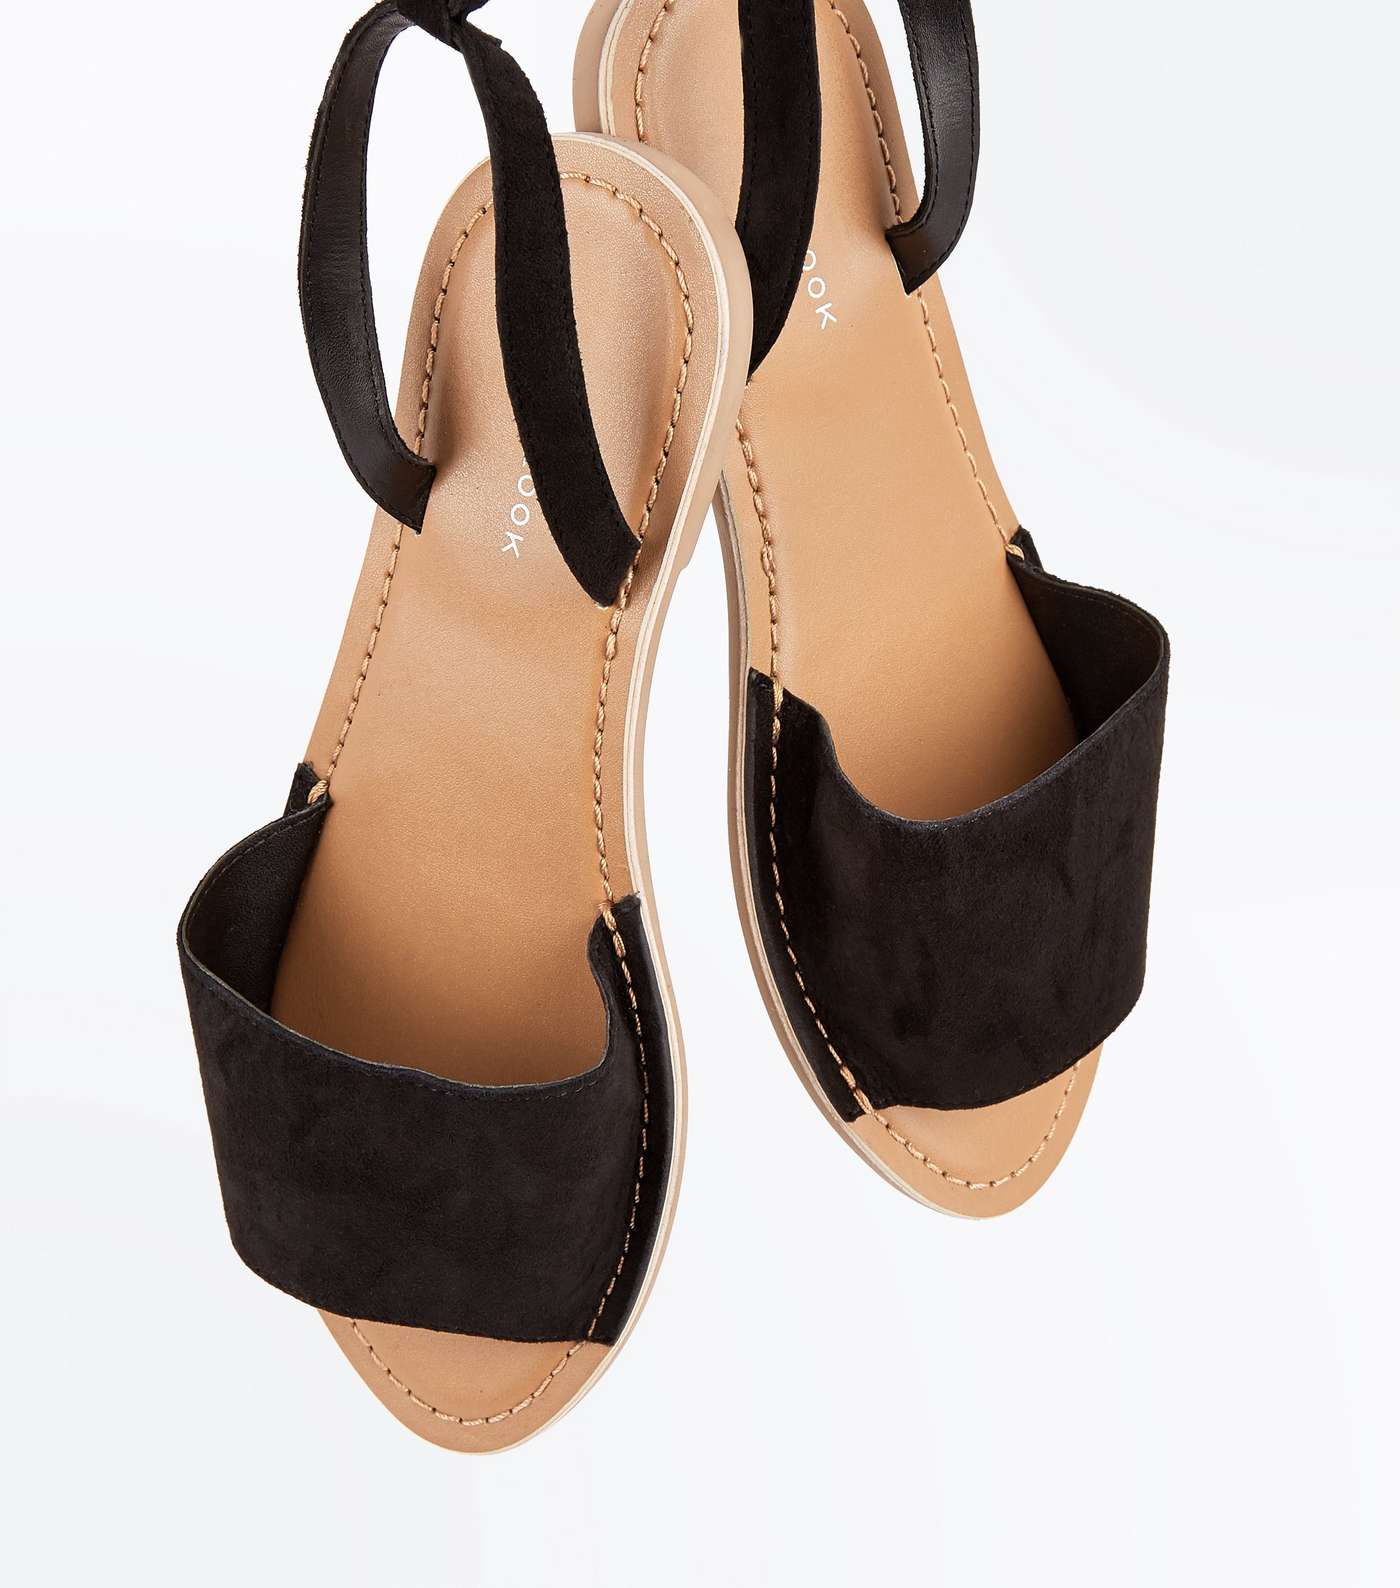 Black Suede Ankle Strap Sandals Image 4